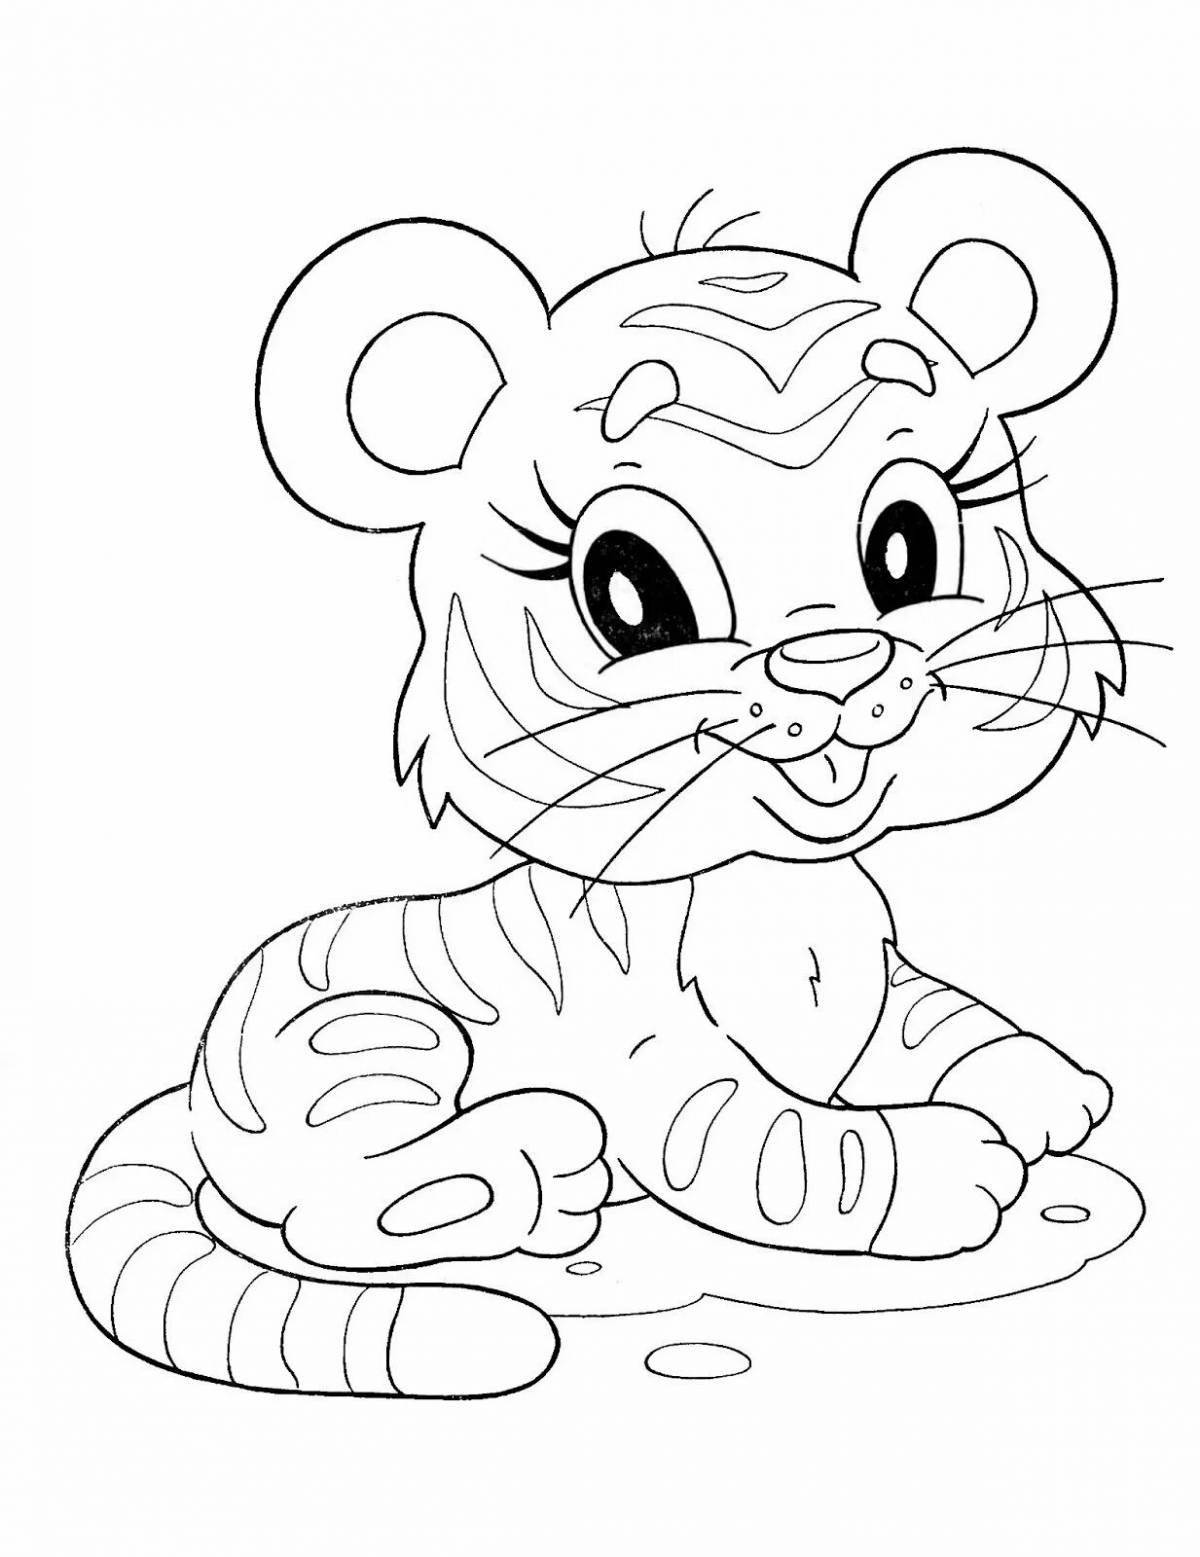 Coloring book smiling tiger cub